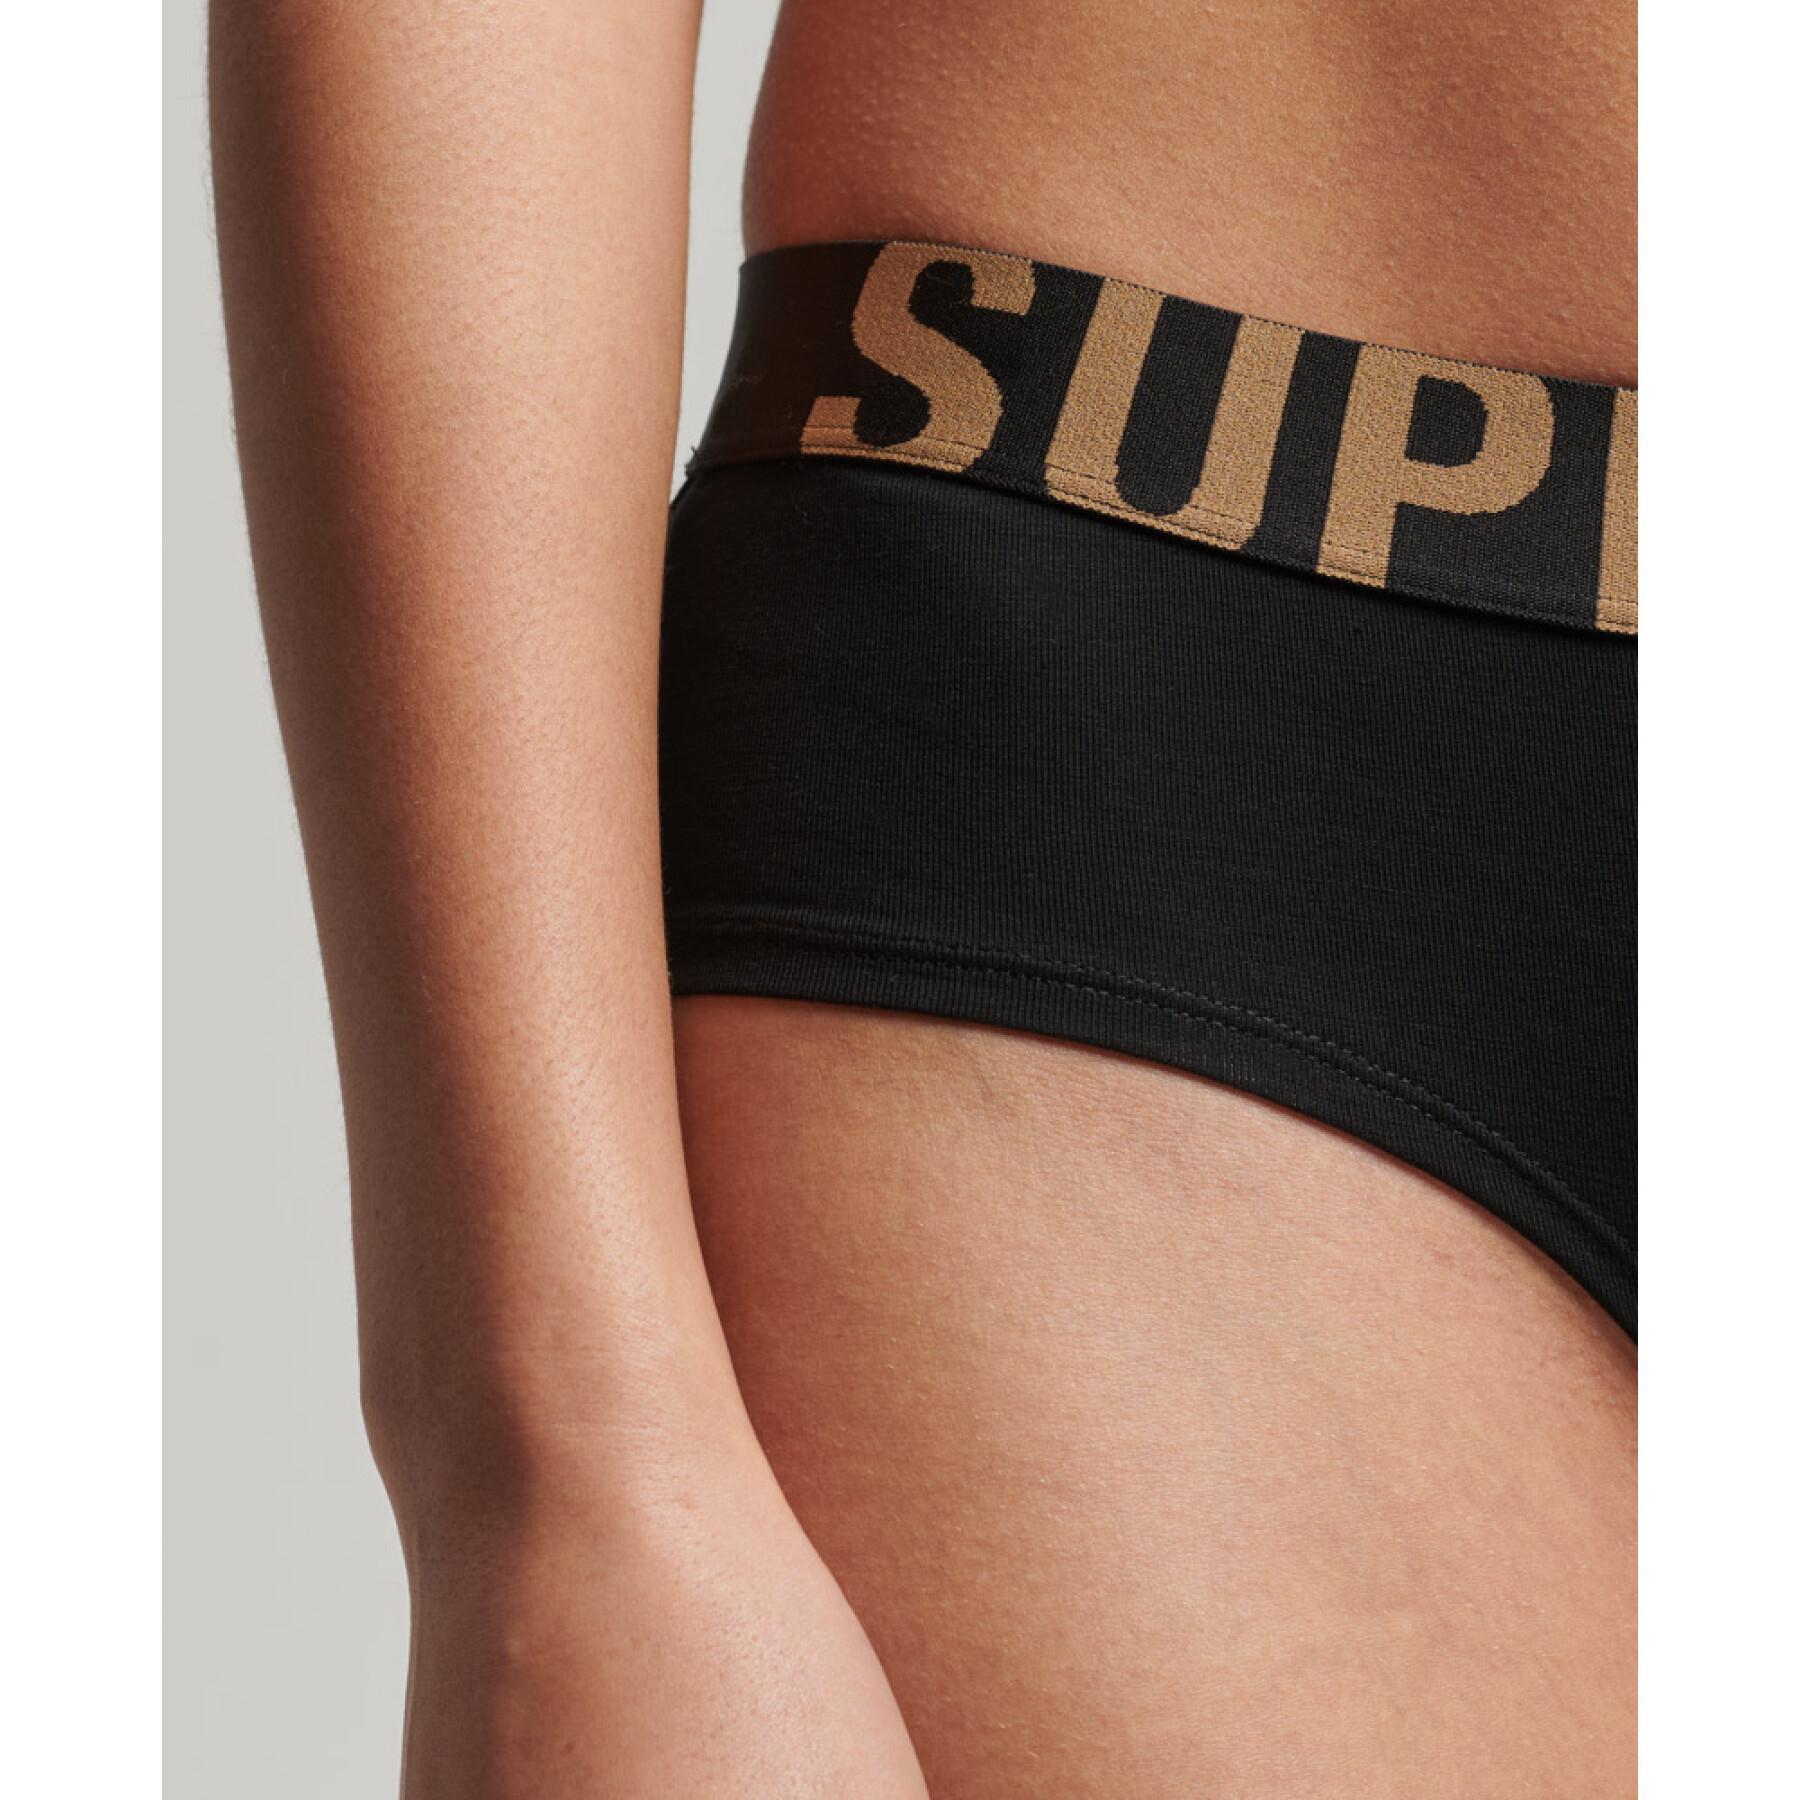 Vrouwen ondergoed met laag taille logo Superdry